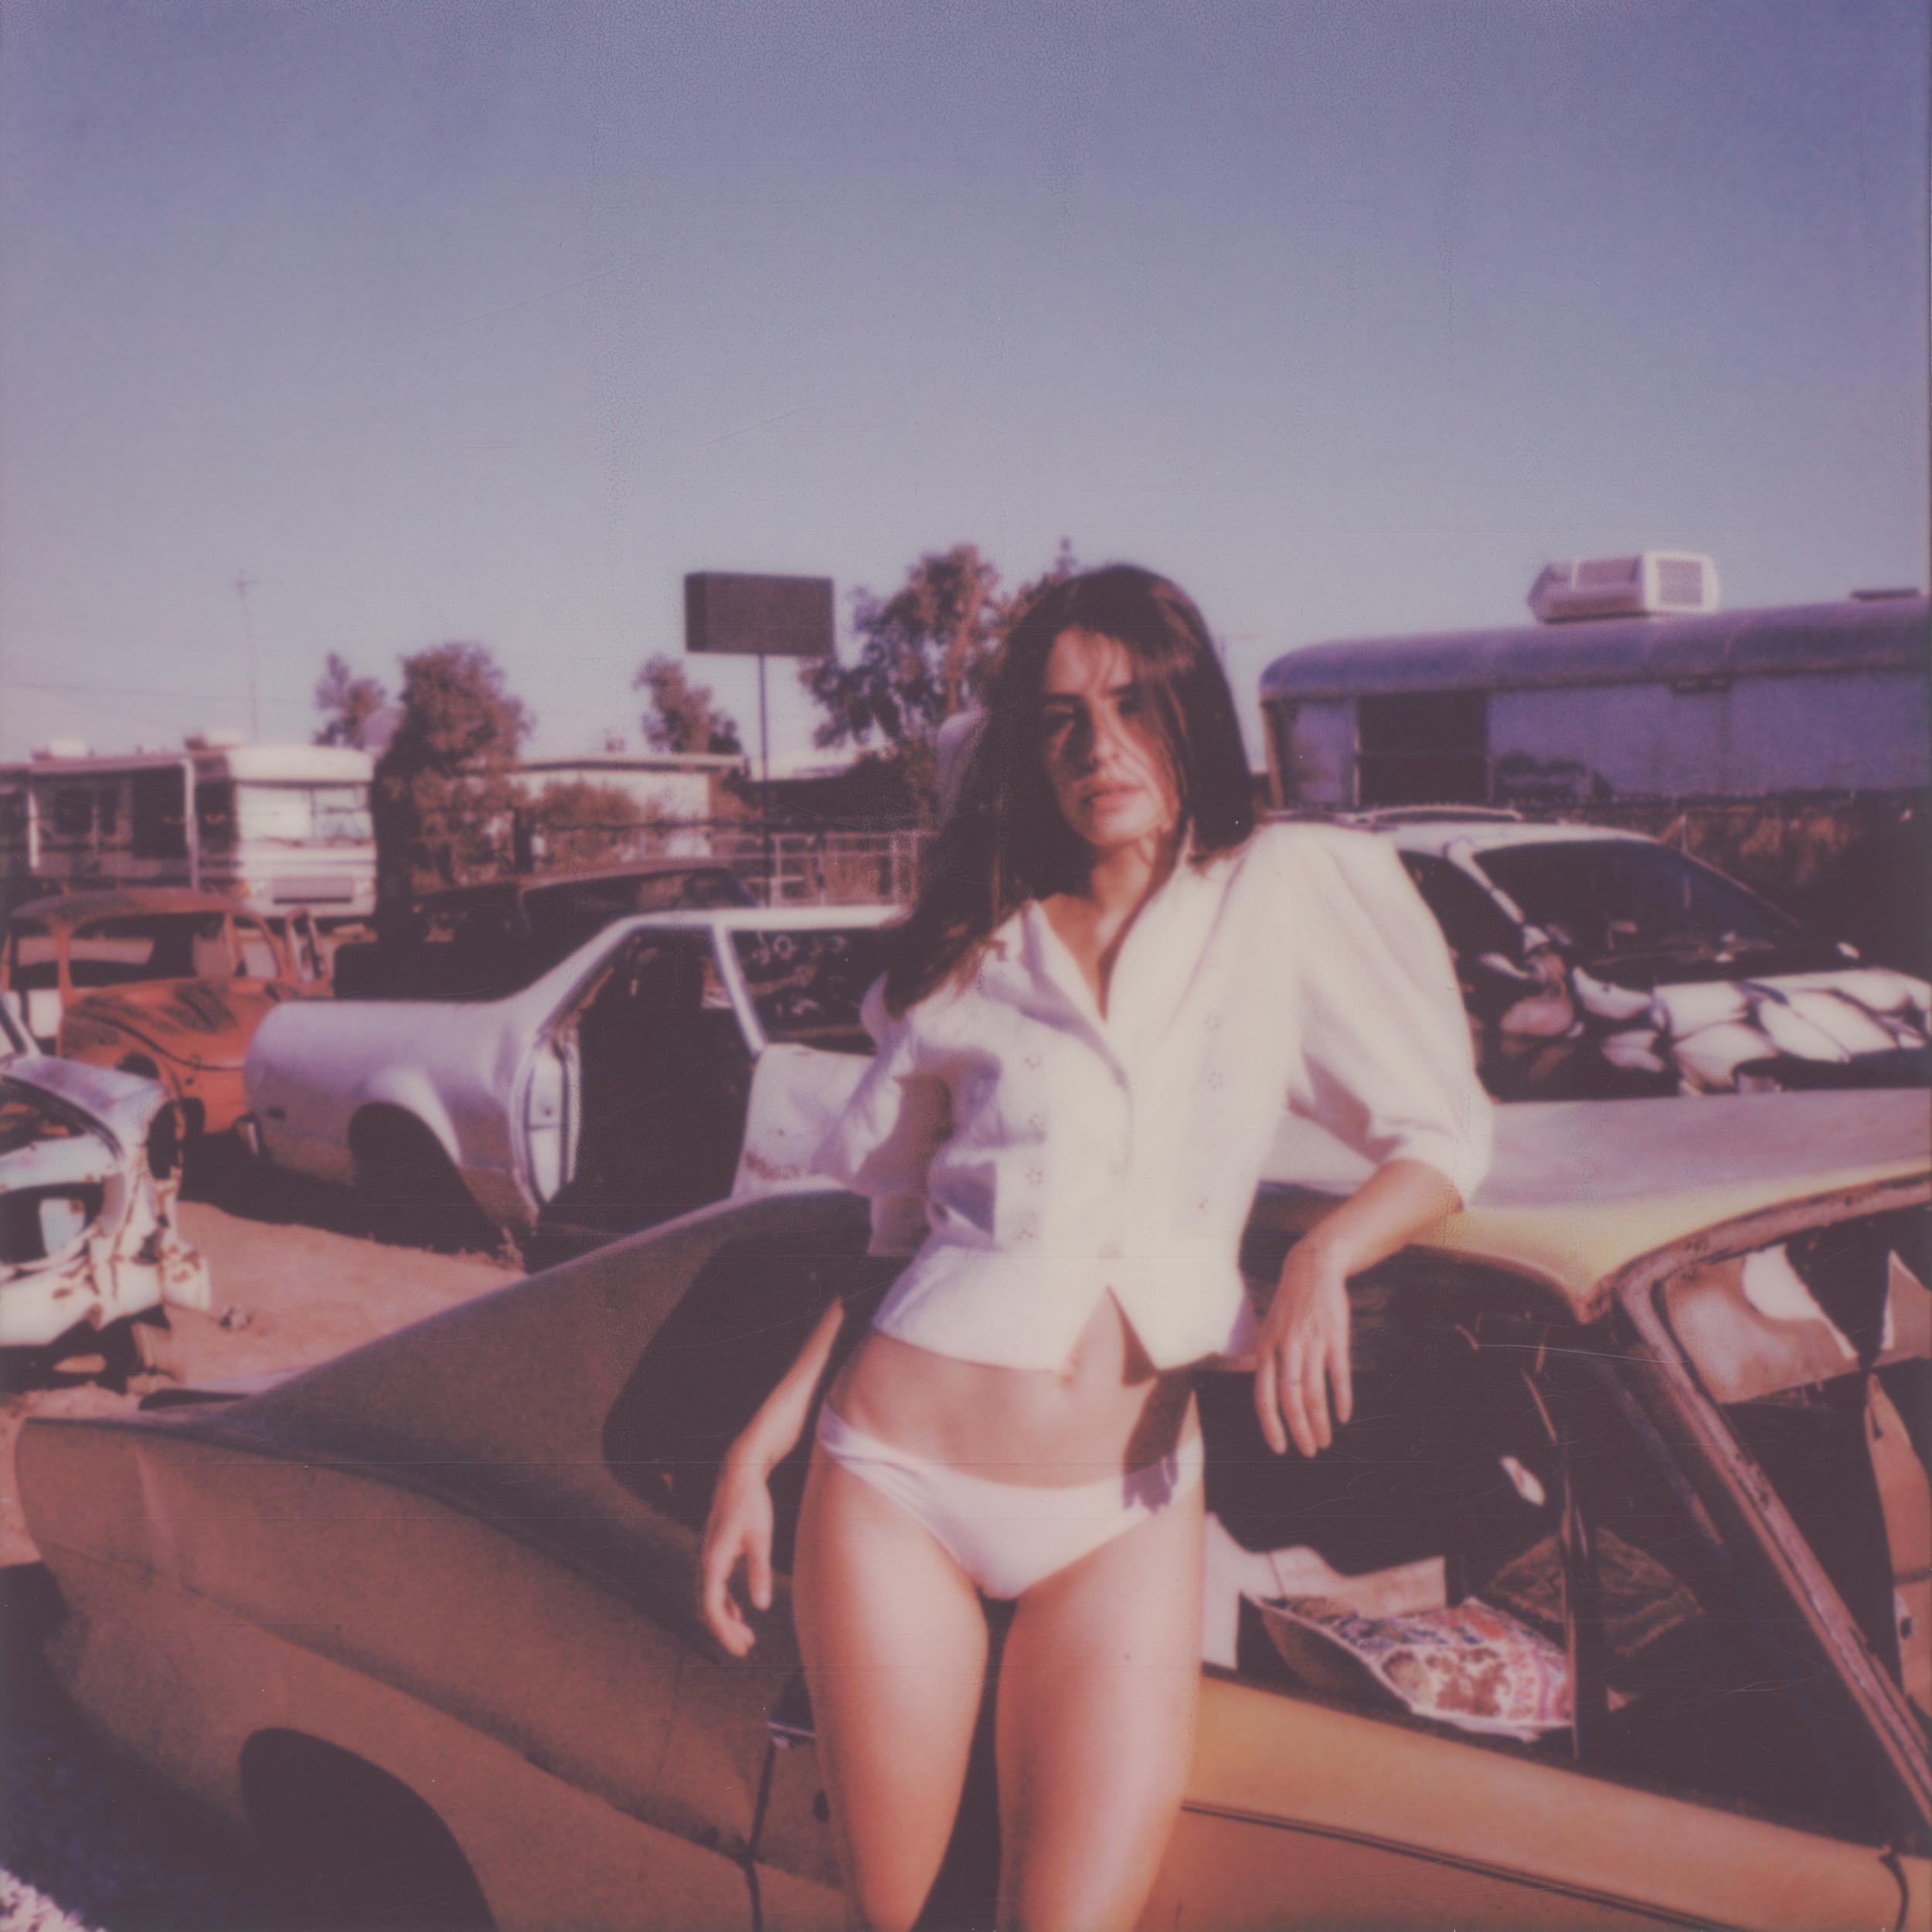 Kirsten Thys van den Audenaerde Nude Photograph - Drive-in Dreams, Edition 2/7 -Contemporary, Polaroid, Color, Women, 21st Century